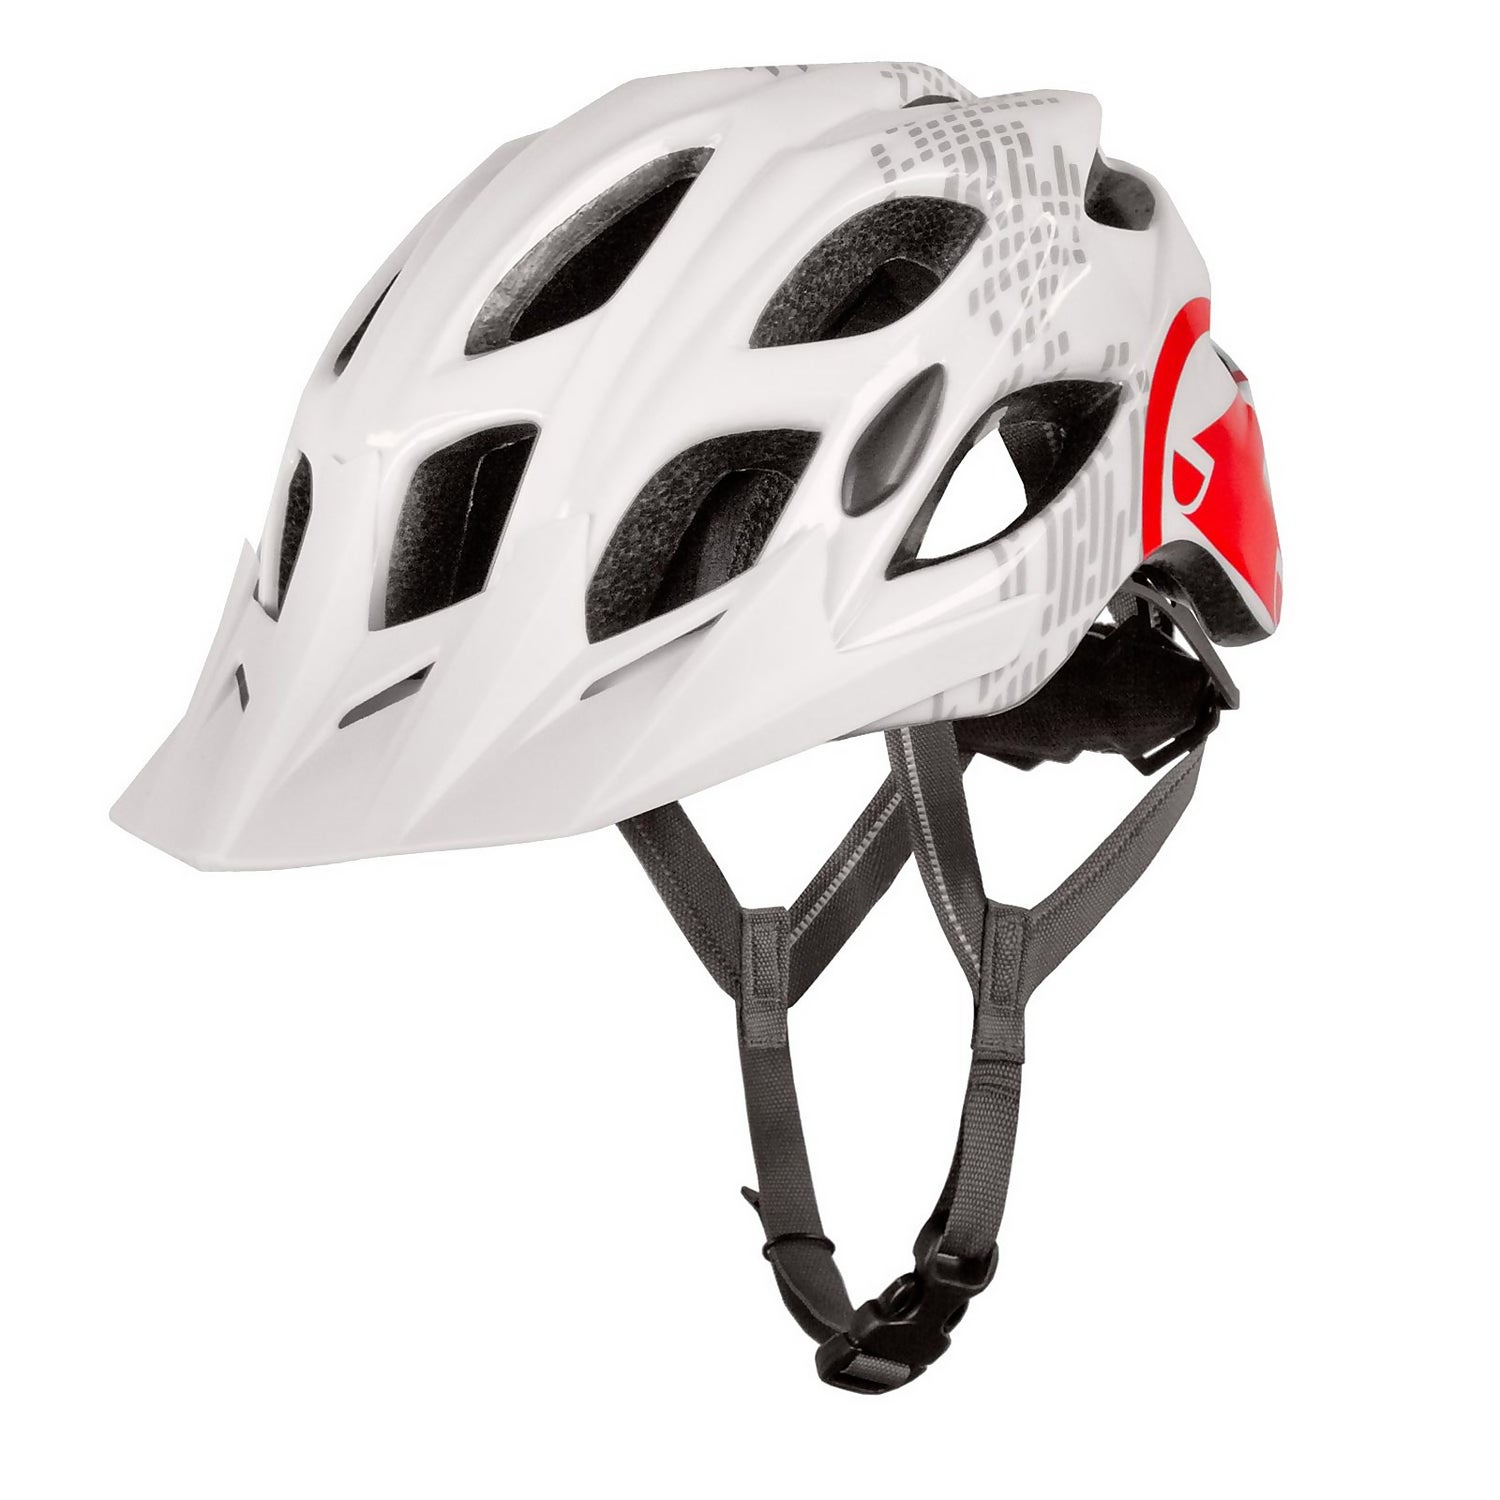 Hummvee Helmet - White - S-M